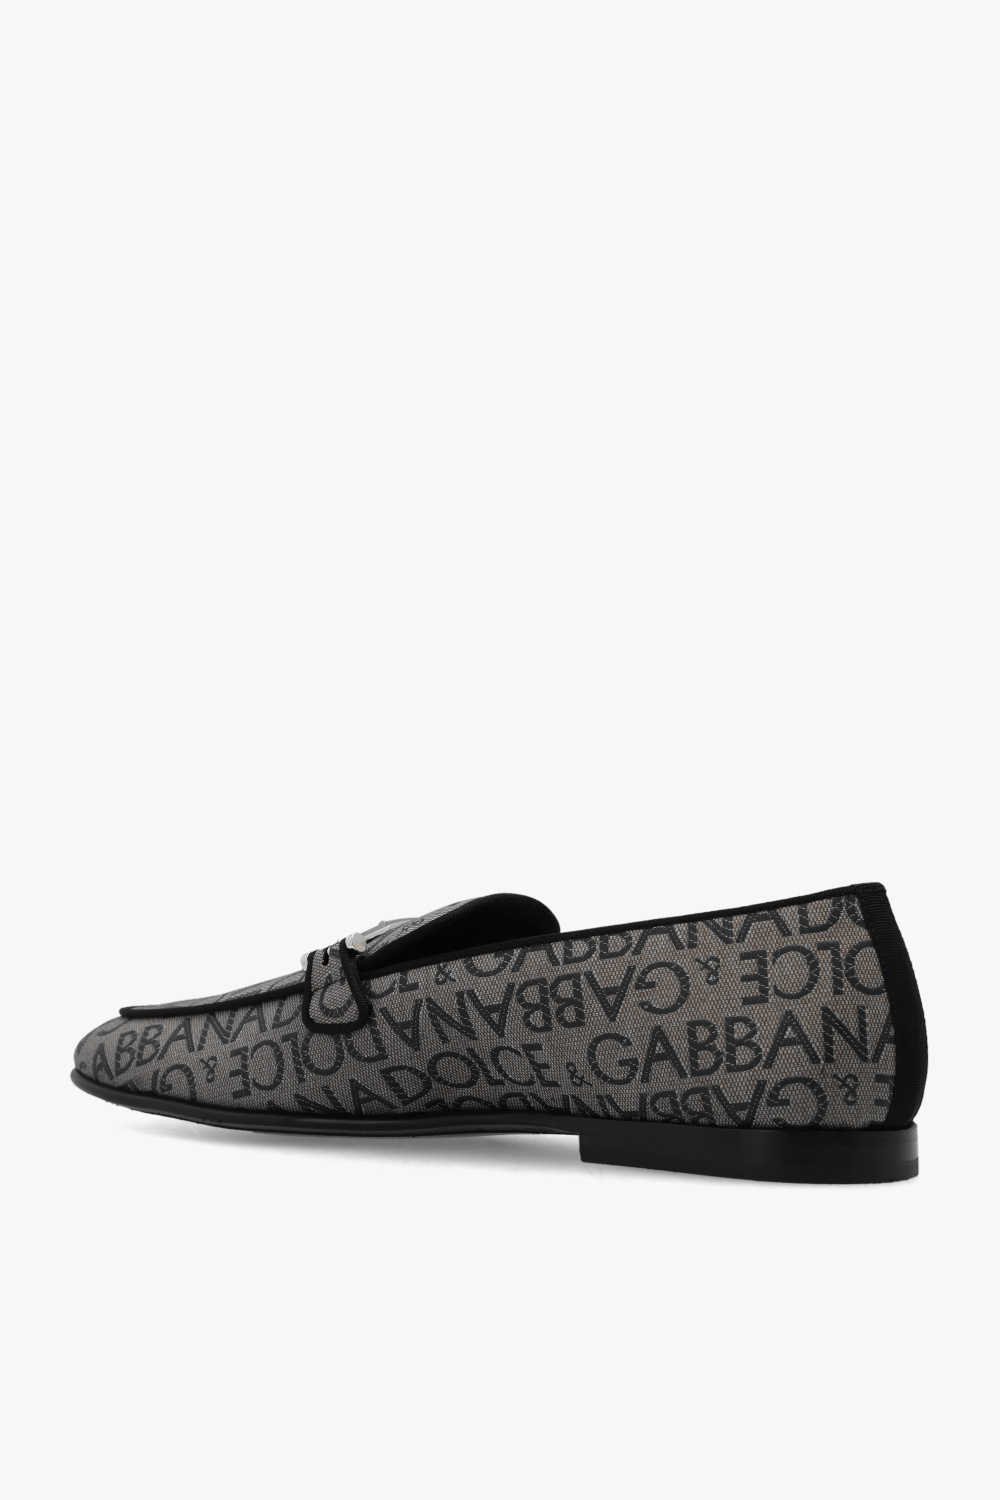 dolce Violett & Gabbana Loafers with monogram